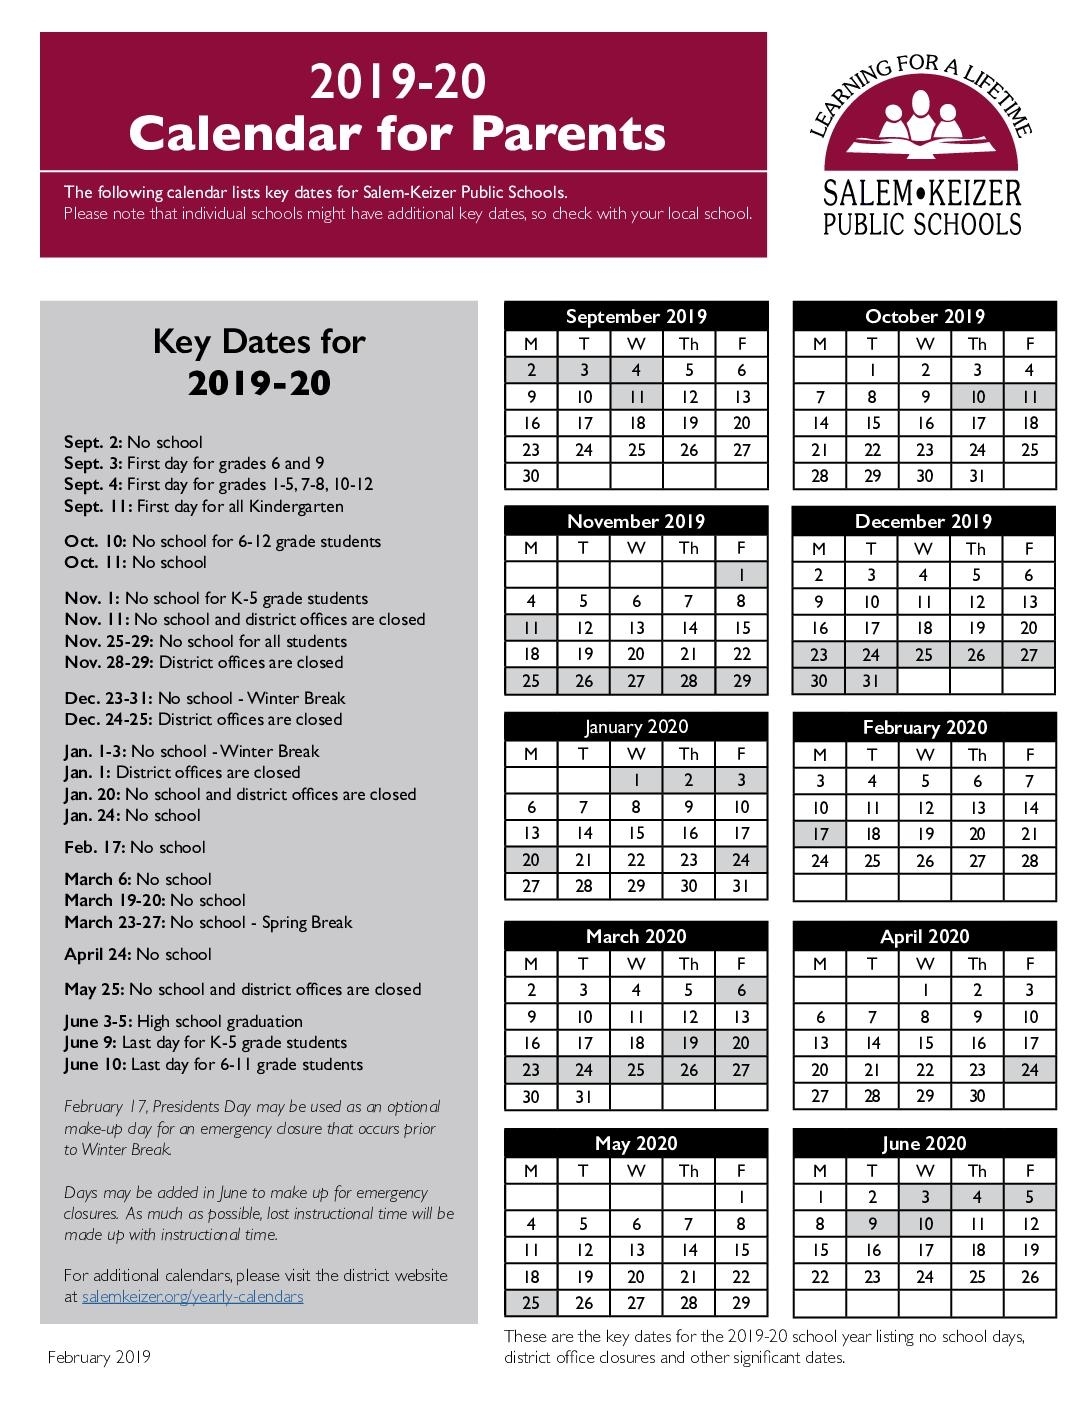 Salem-Keizer School Year Calendars | Salem-Keizer Public Schools St J School Calendar